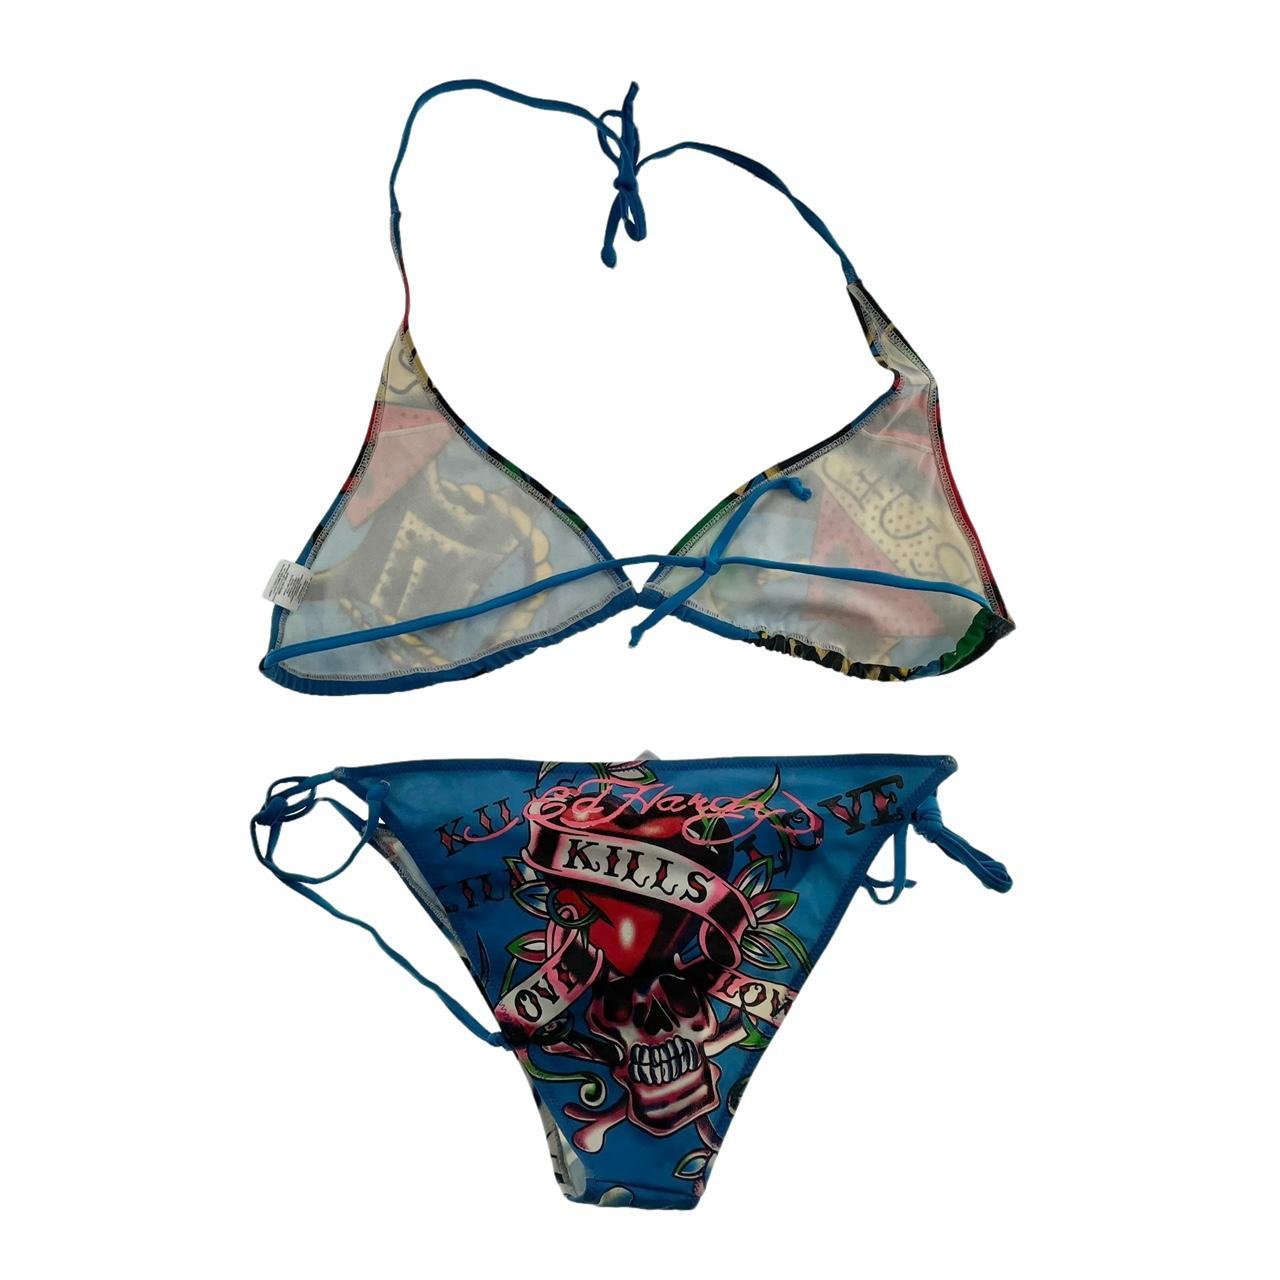 Vintage Ed Hardy Bikini Set Size Xl Description Depop 